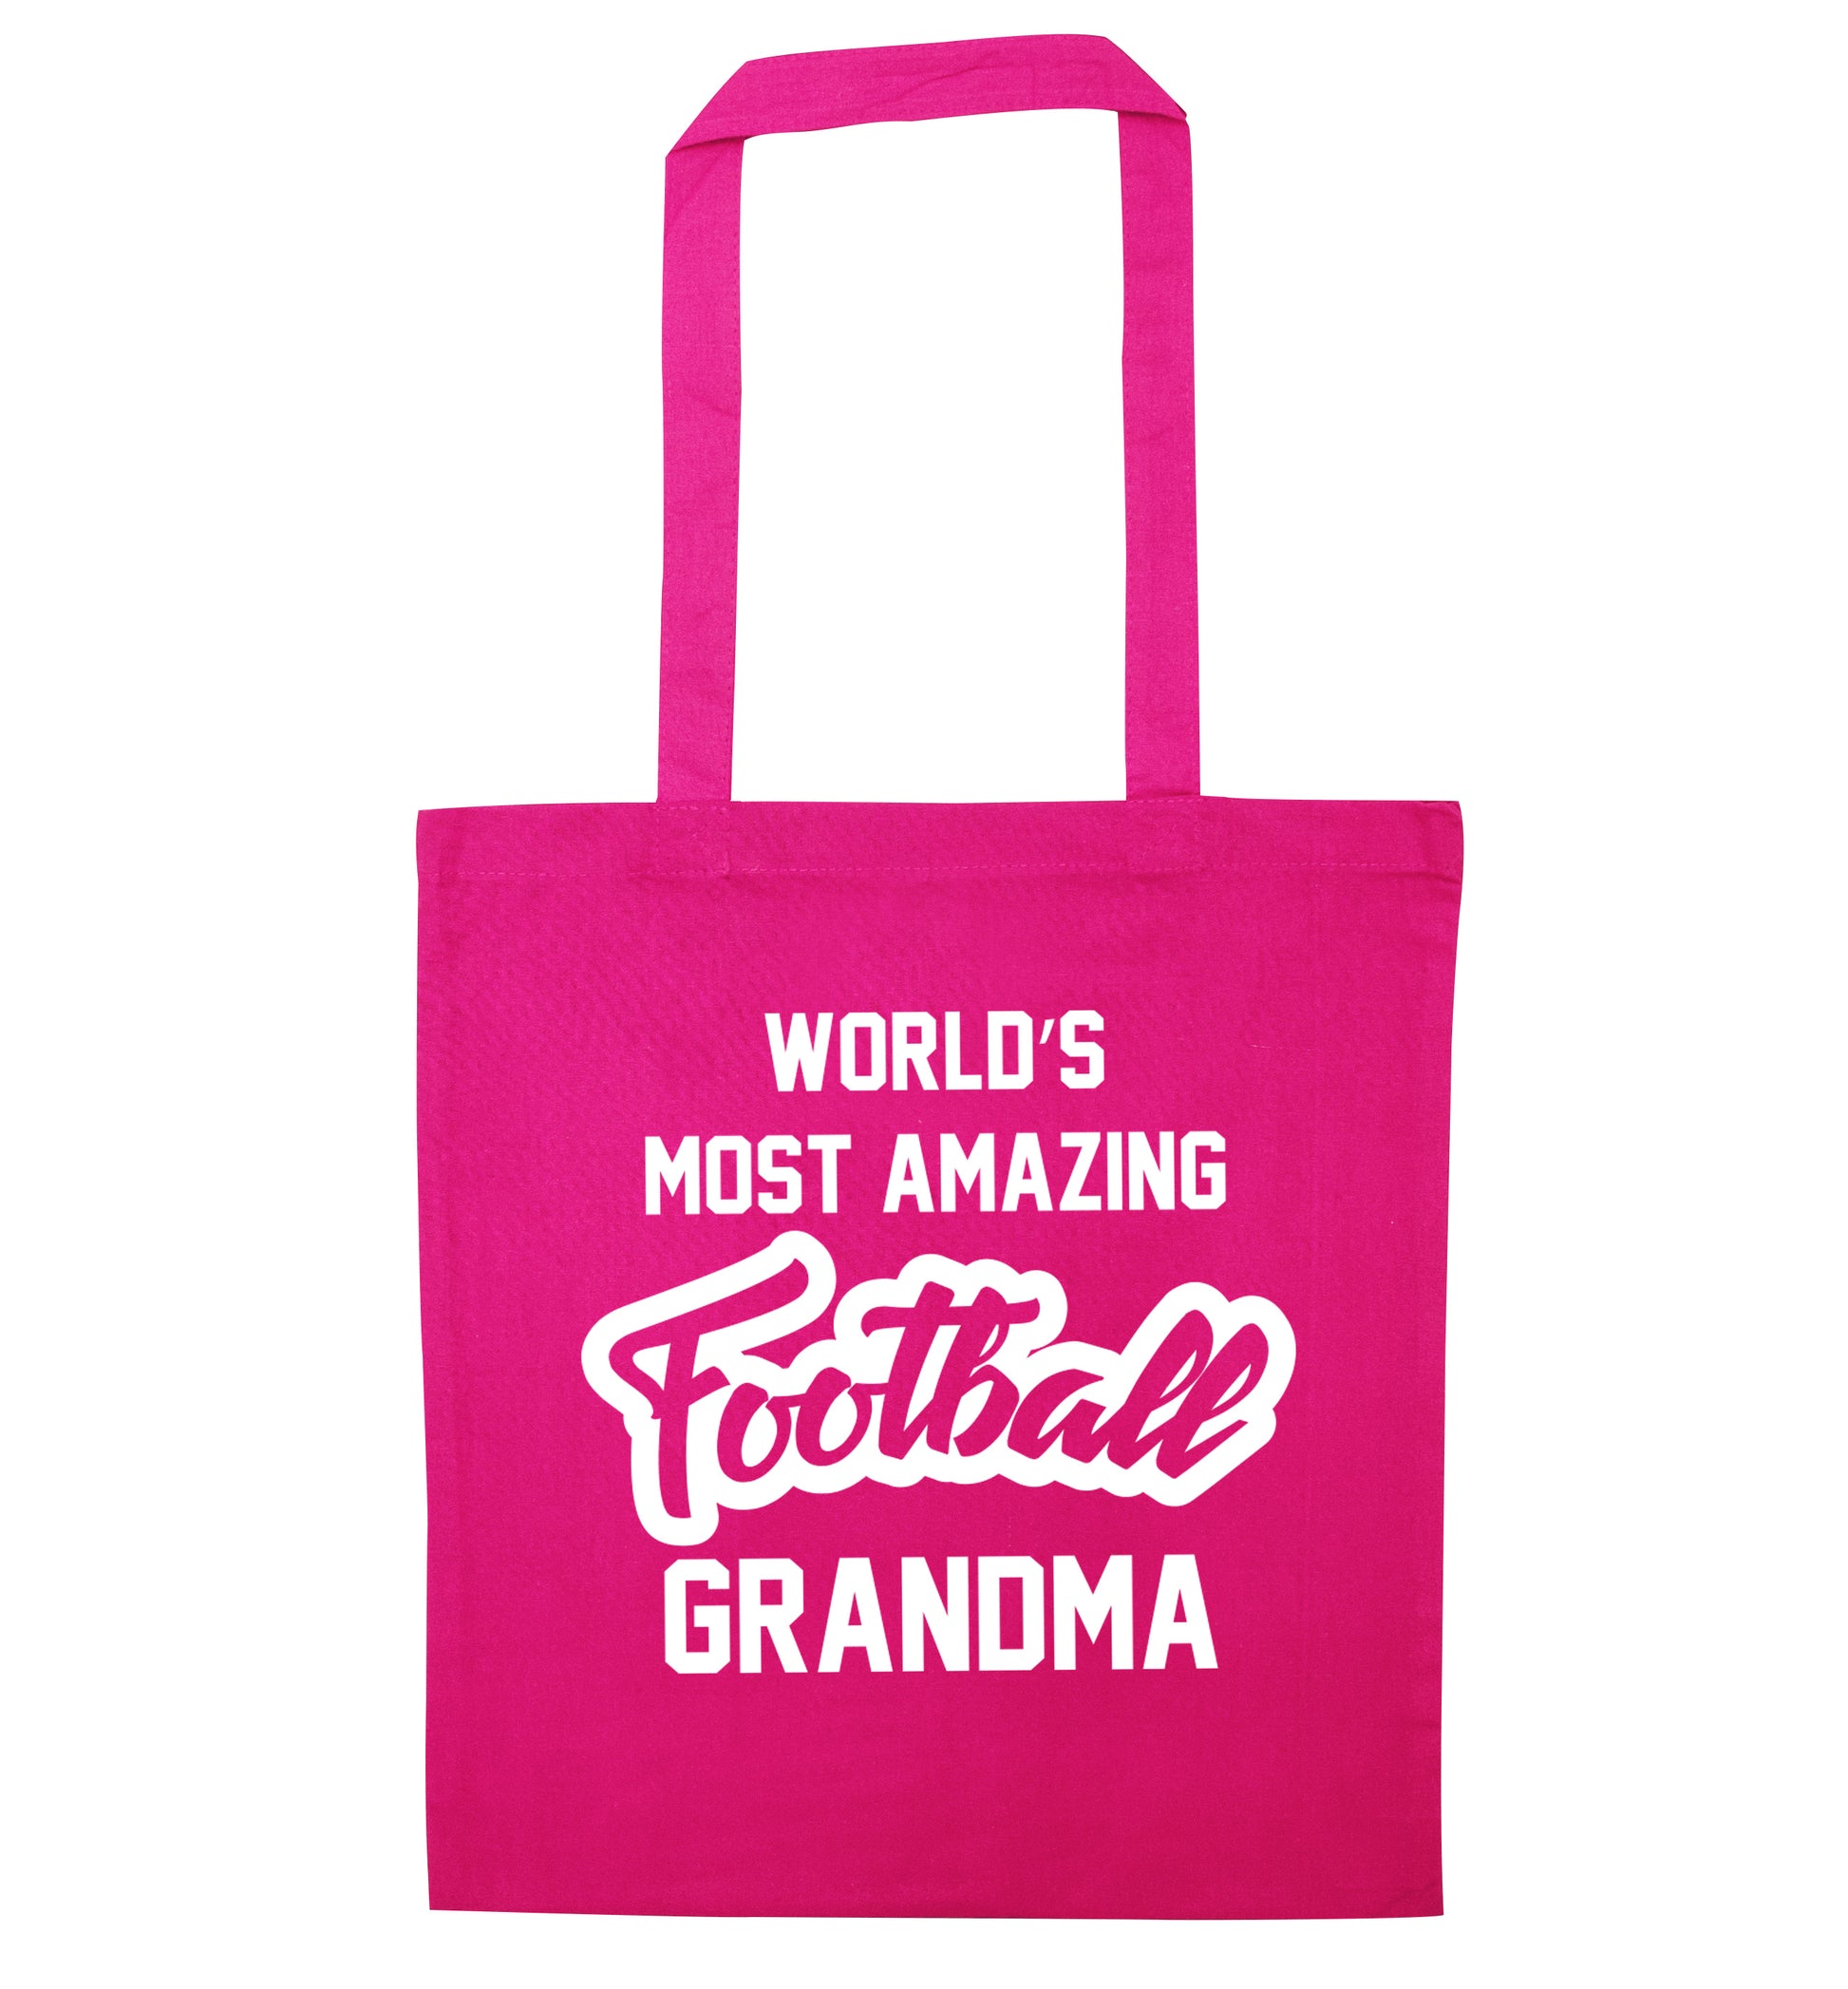 Worlds most amazing football grandma pink tote bag